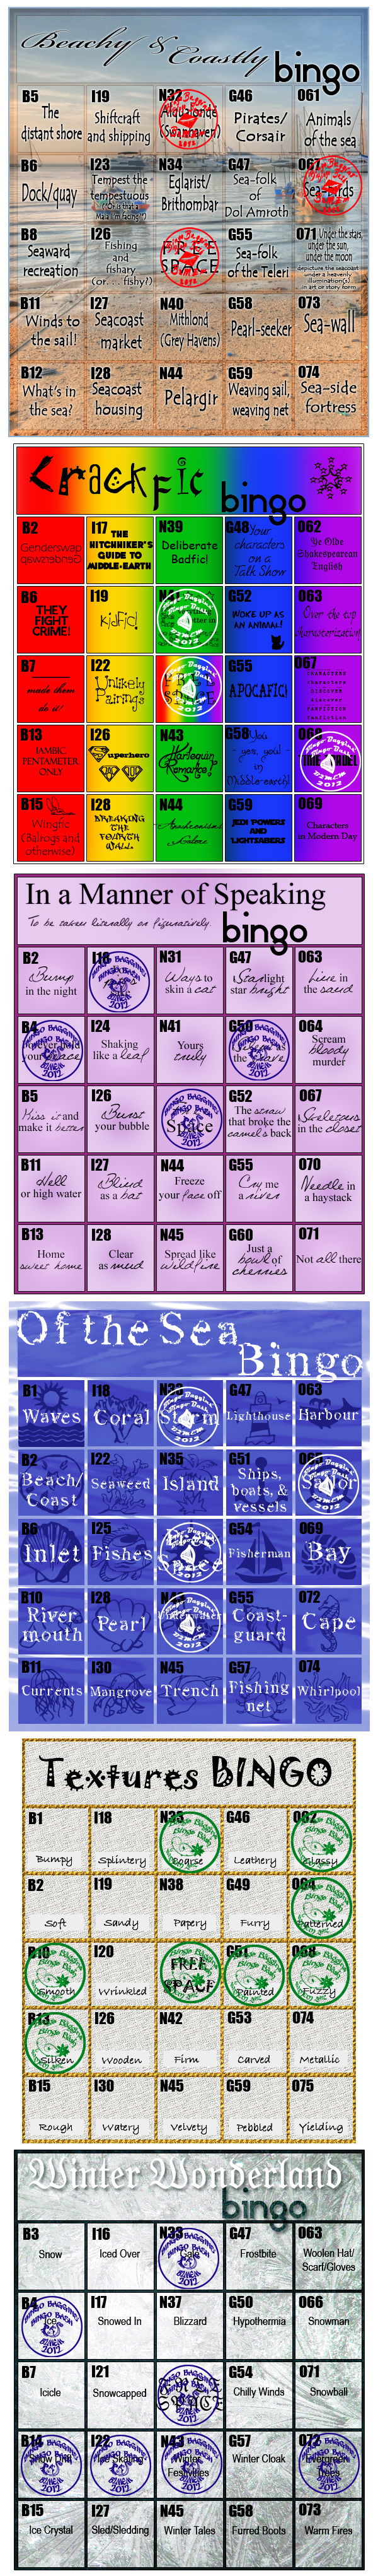 Independence1776's Bingo Cards